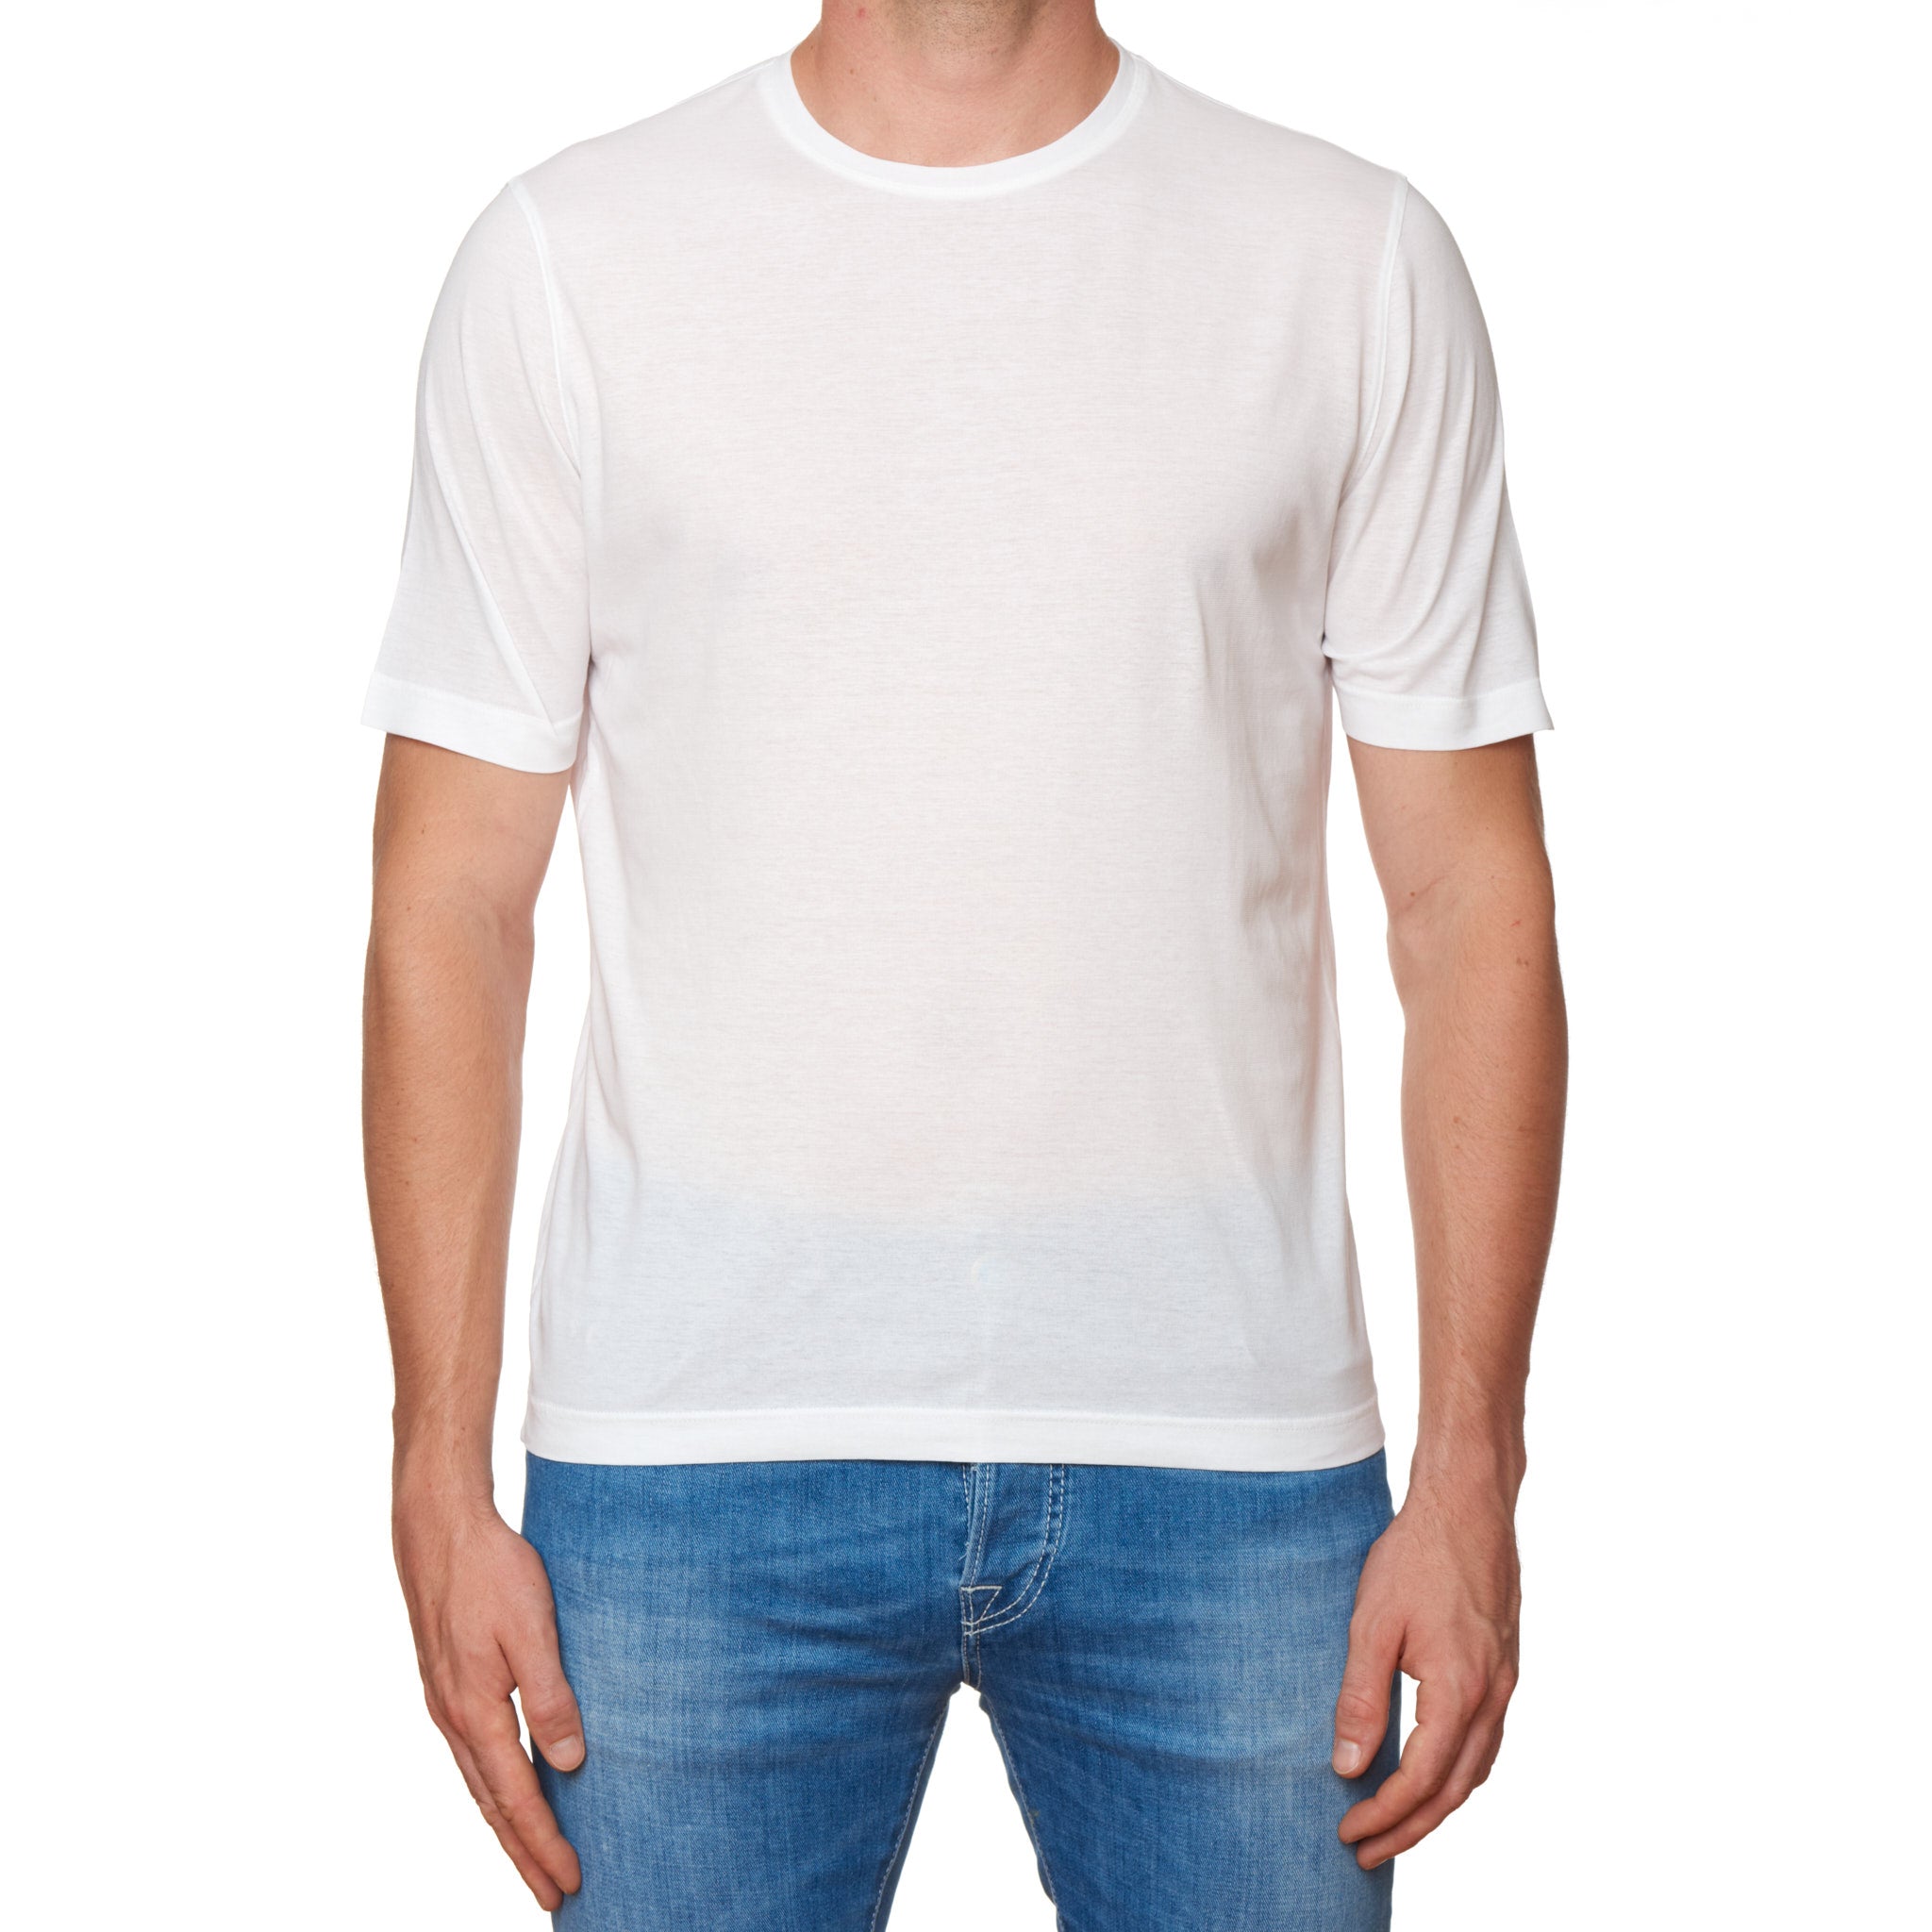 Kiton KIRED "Baciomc" Solid White Exclusive Crepe Cotton Short Sleeve T-Shirt